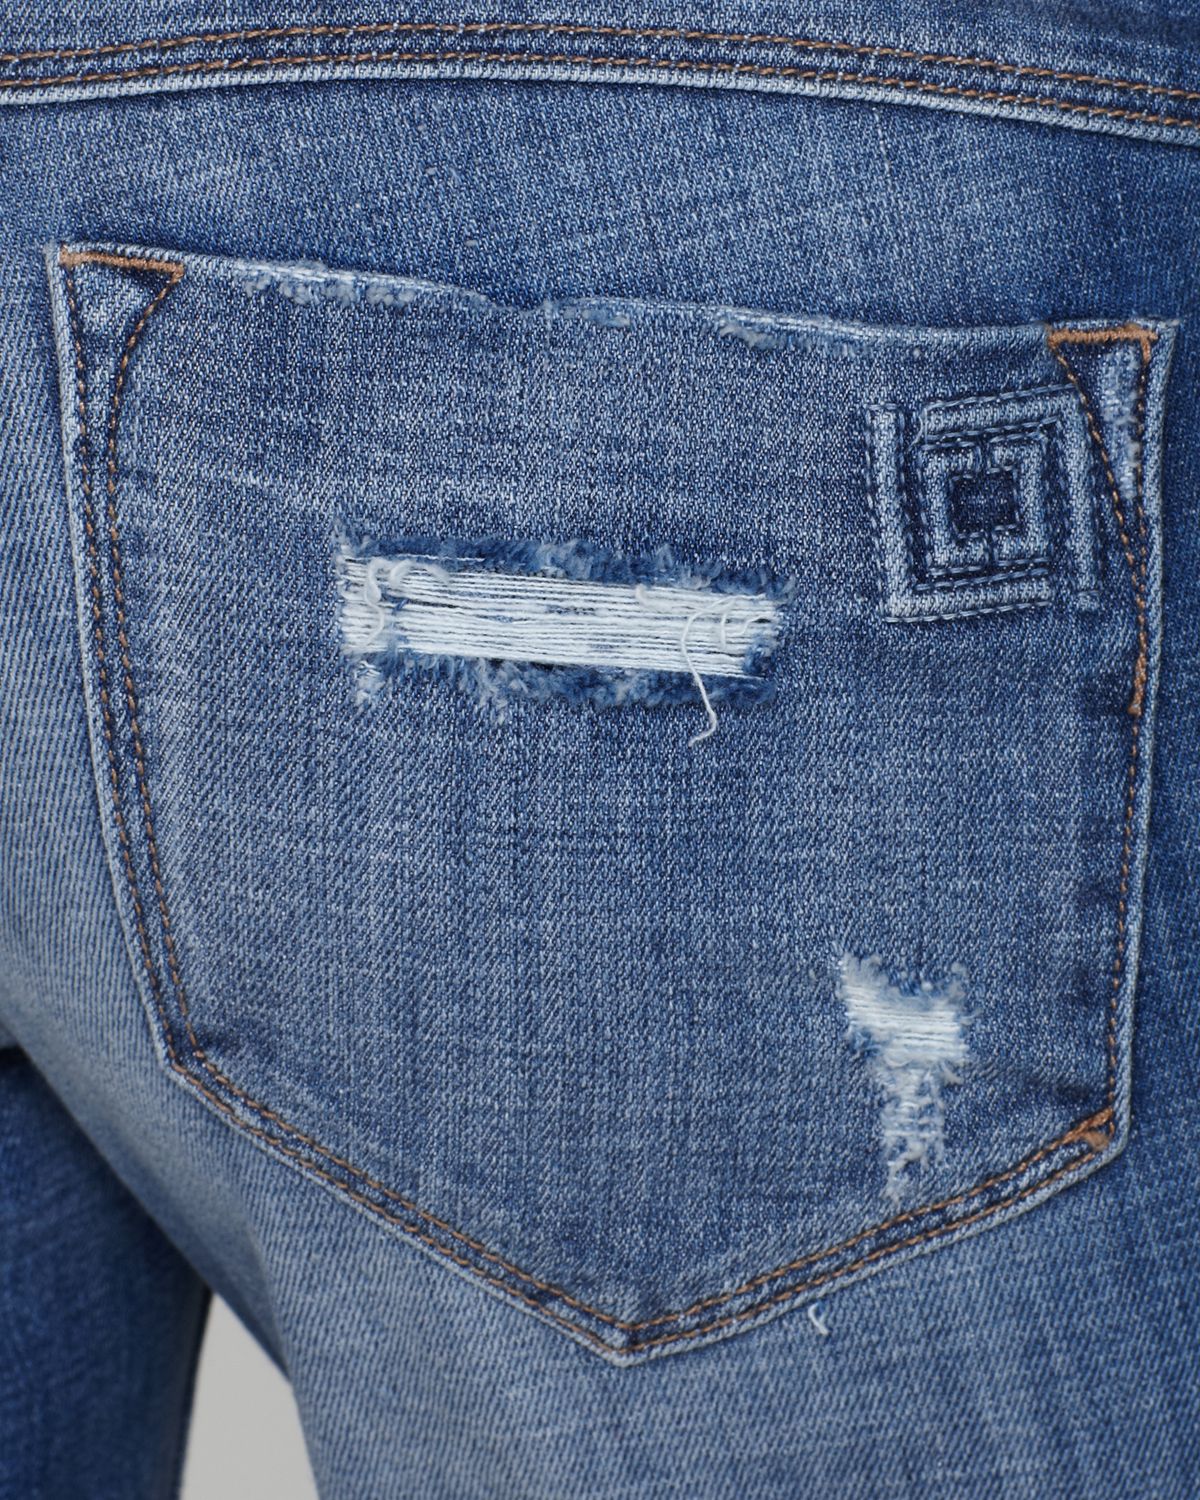 Sold design lab Jeans - Best Friend in Blue | Lyst